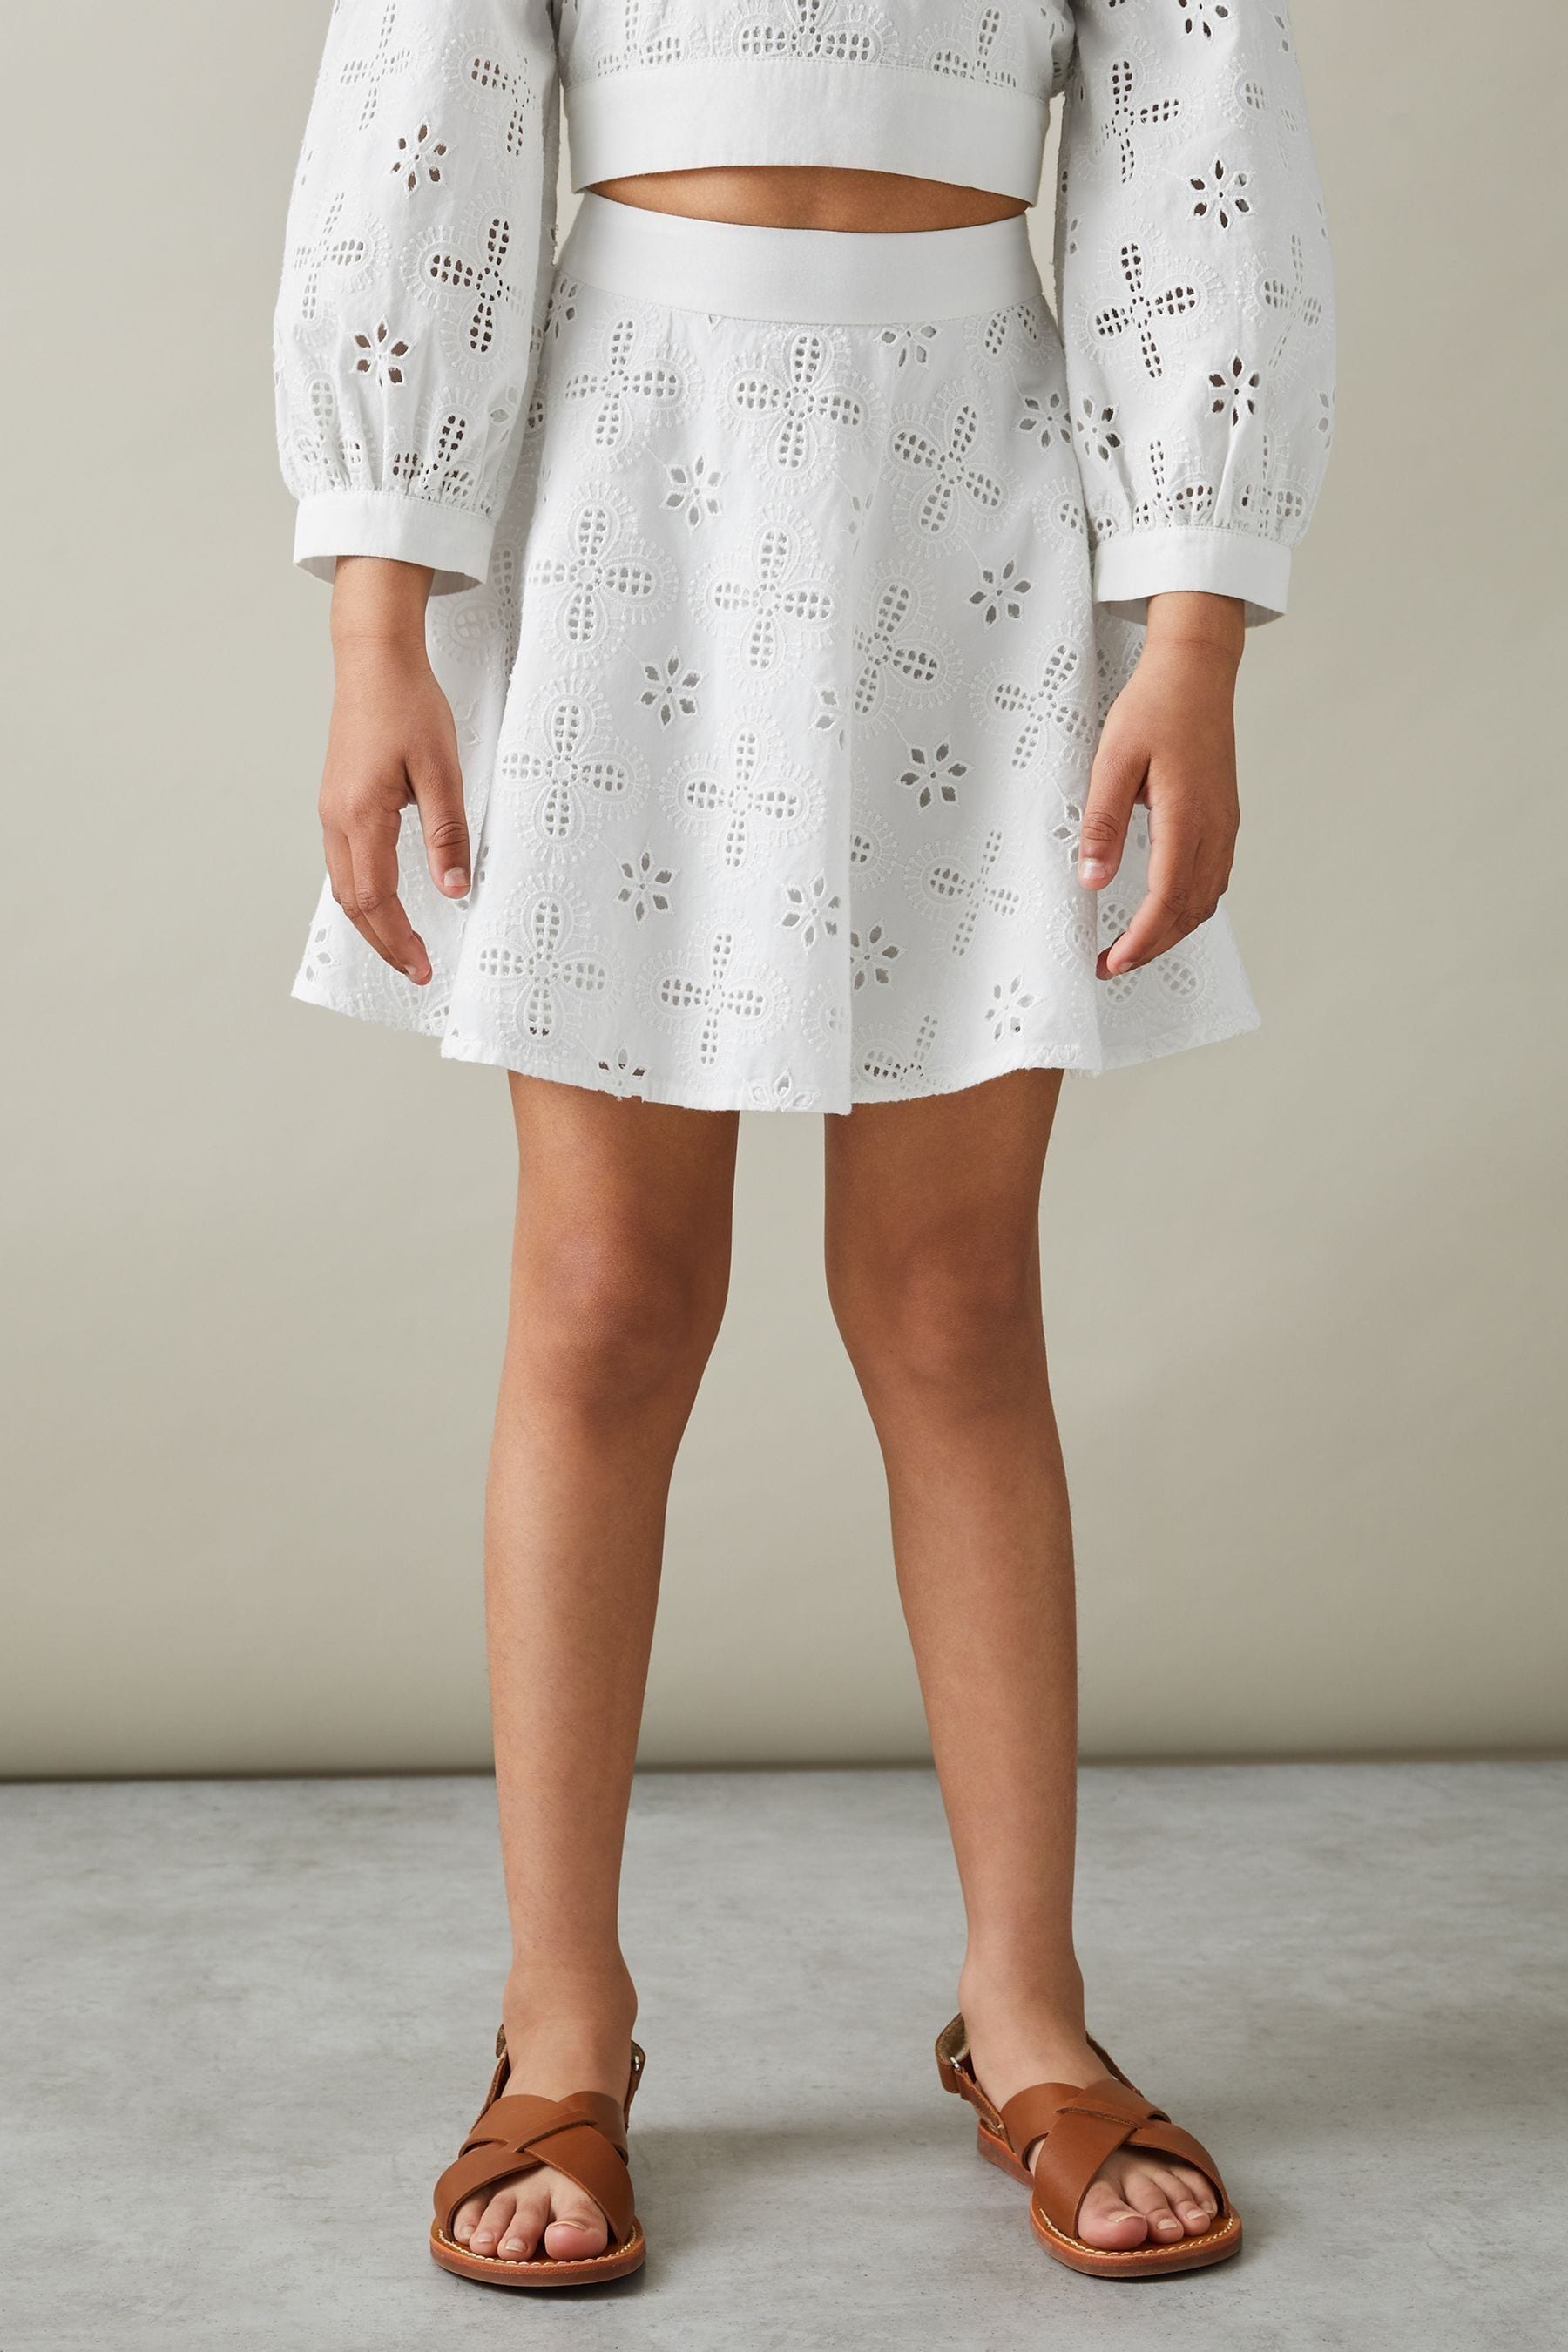 Reiss Kids' Nella - Ivory Senior Cotton Broderie Lace Skirt, Uk 11-12 Yrs